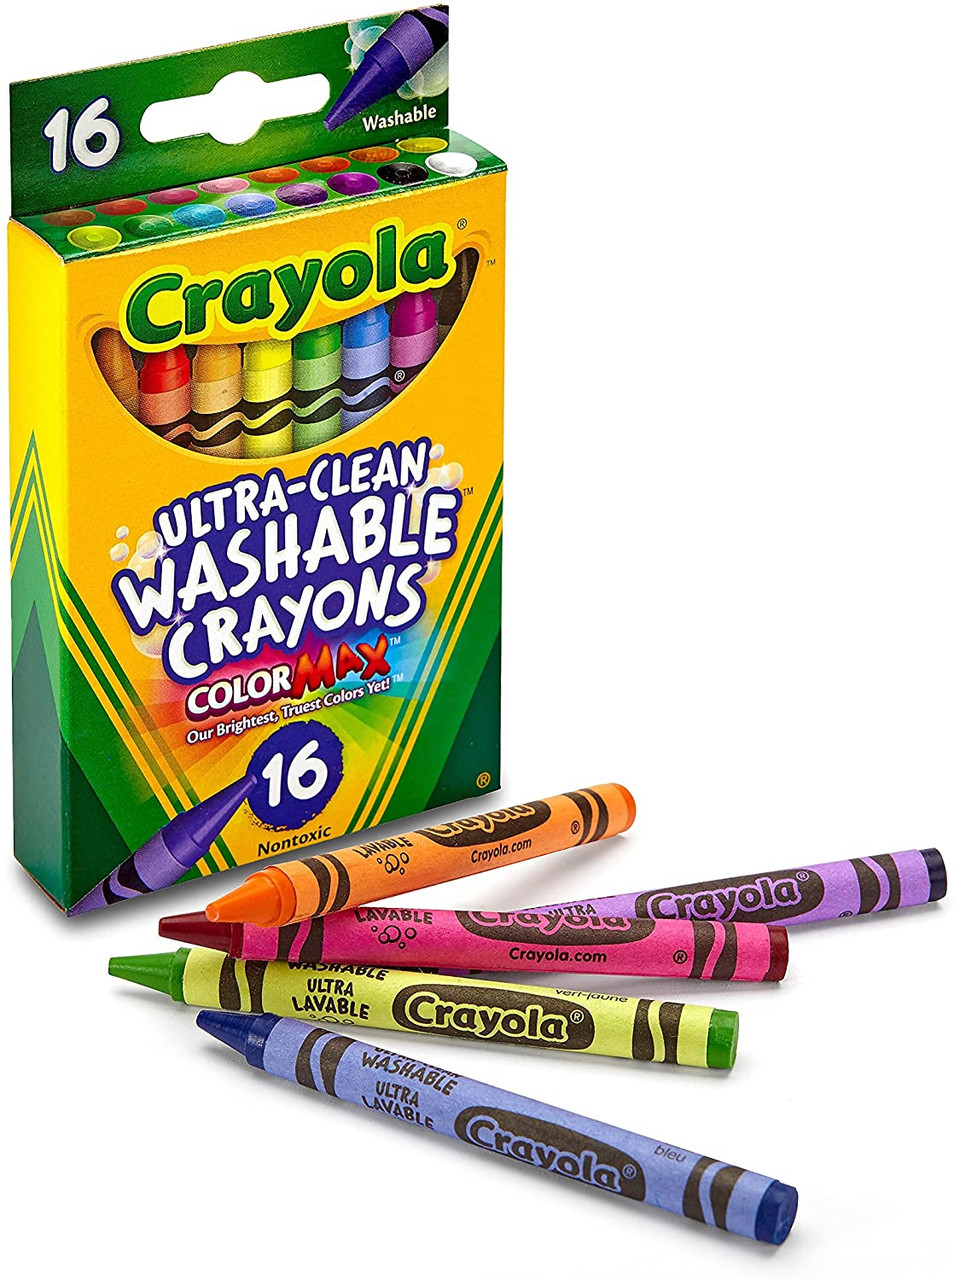 Crayola Crayons Glitter 16Ct